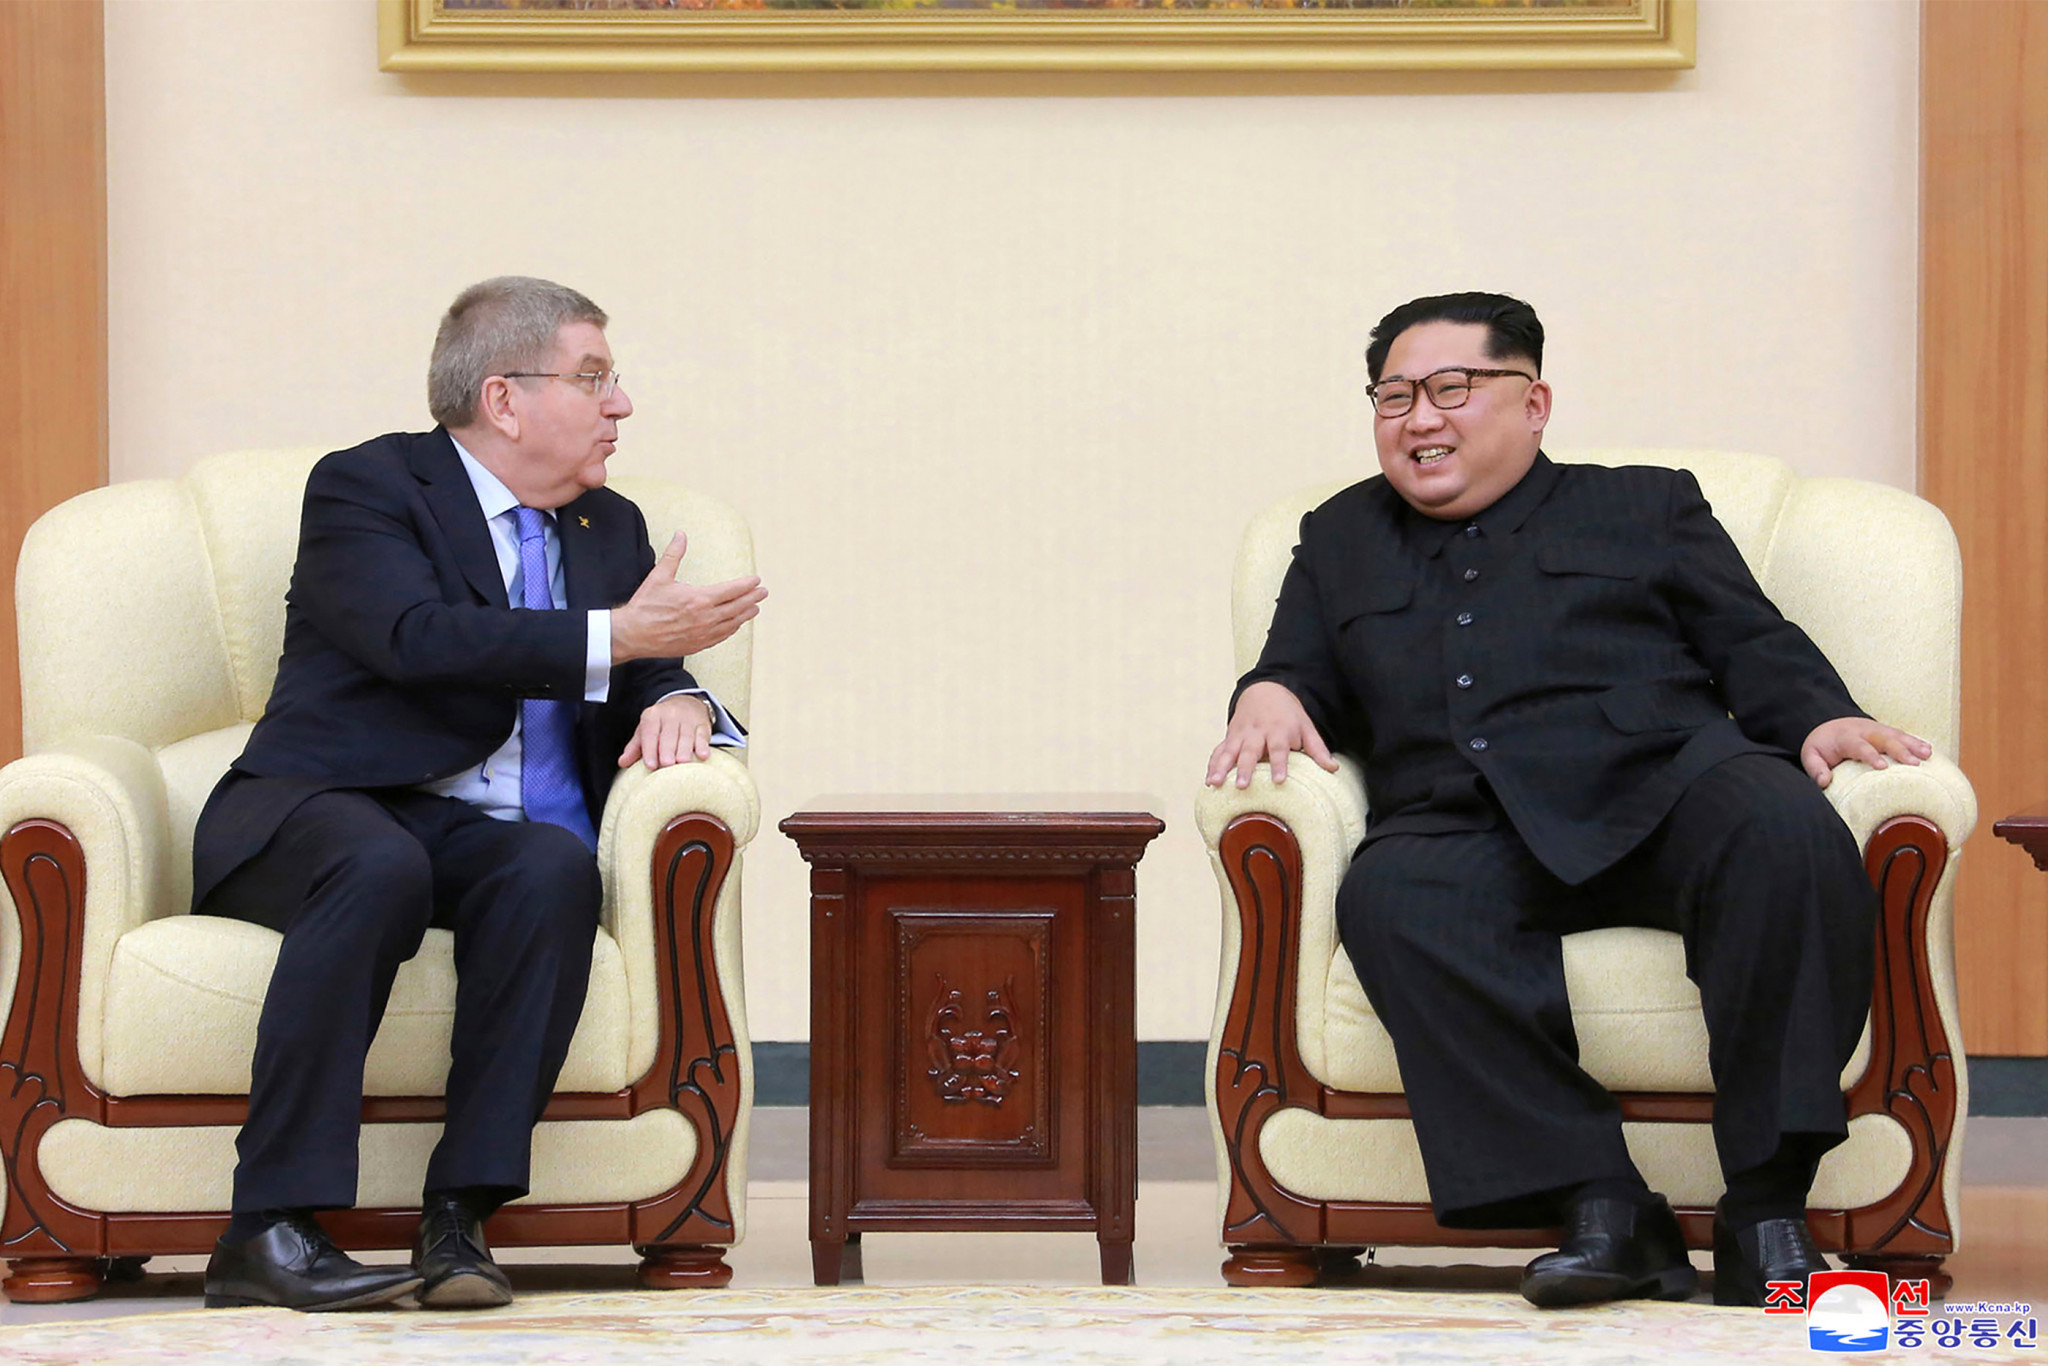 IOC President Thomas Bach, left, alongside North Korean Supreme Leader Kim Jong-Un ©Getty Images